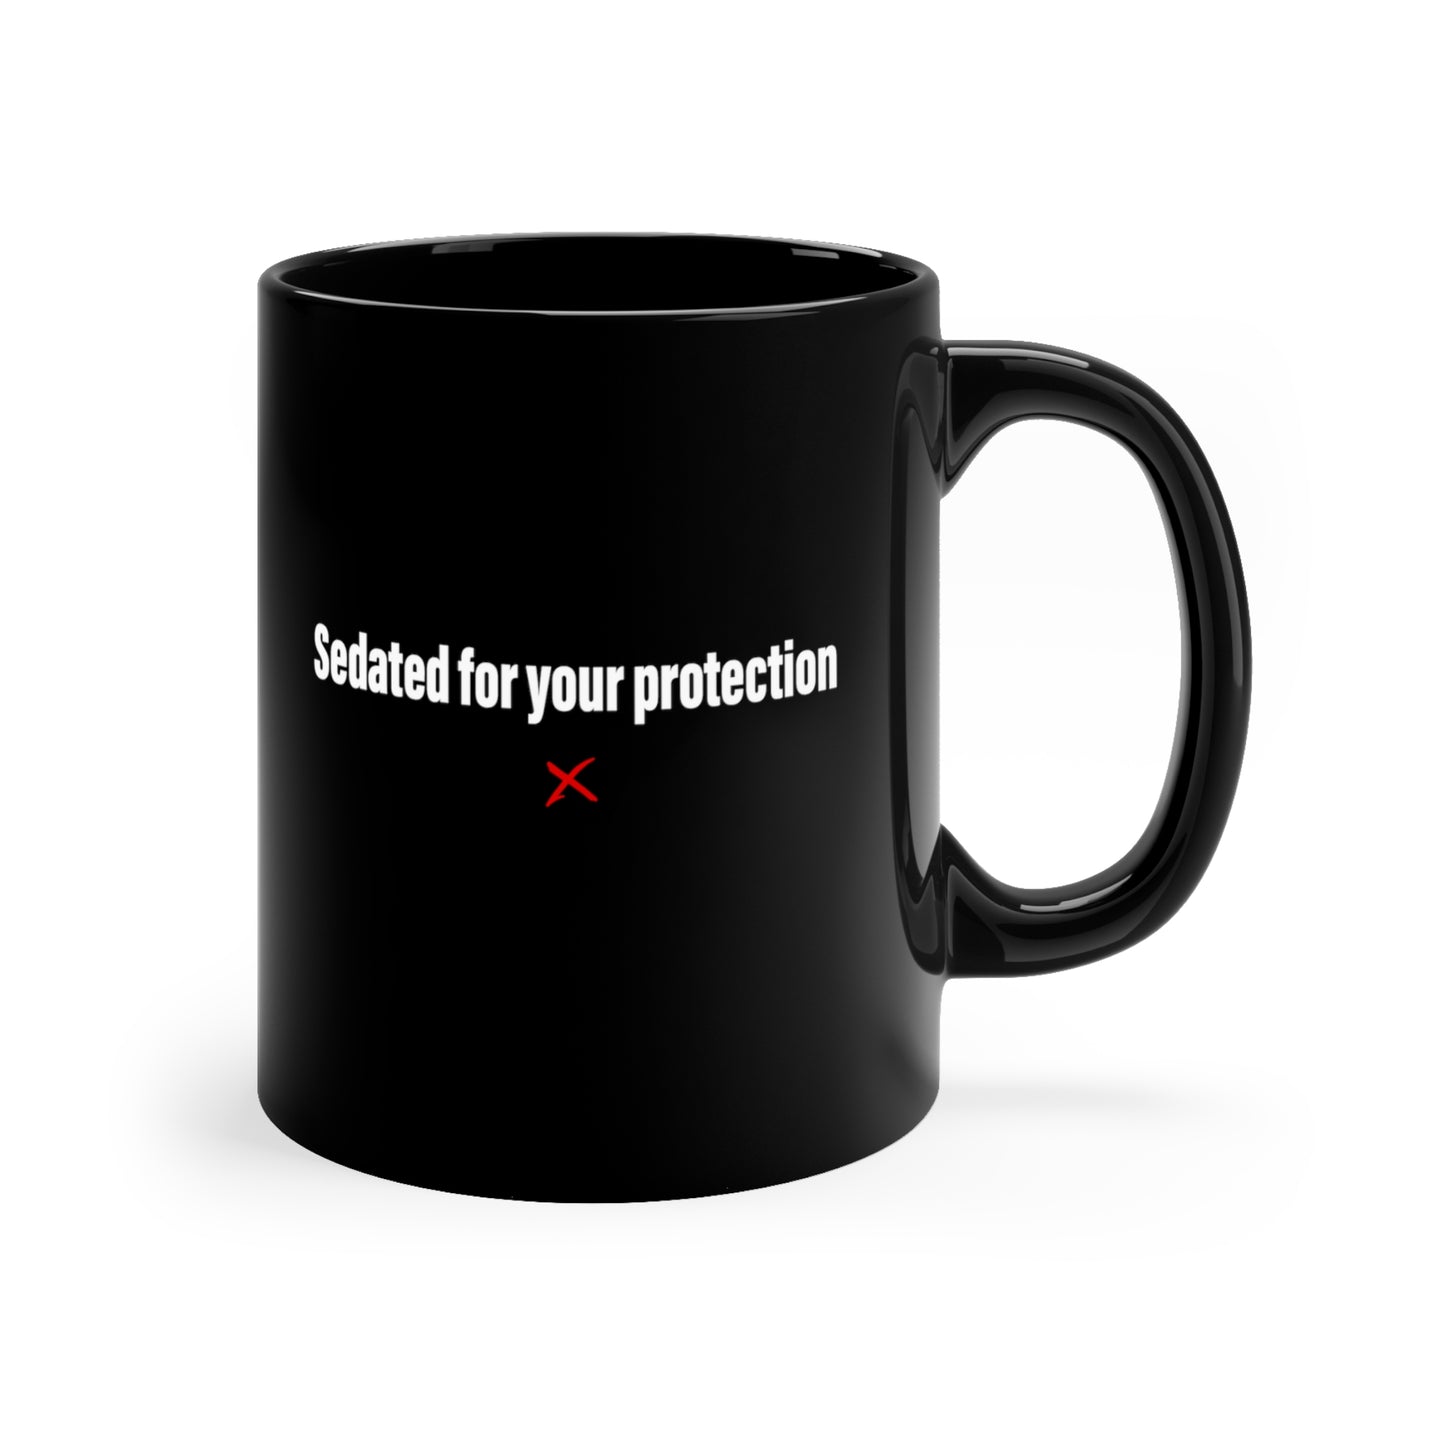 Sedated for your protection - Mug